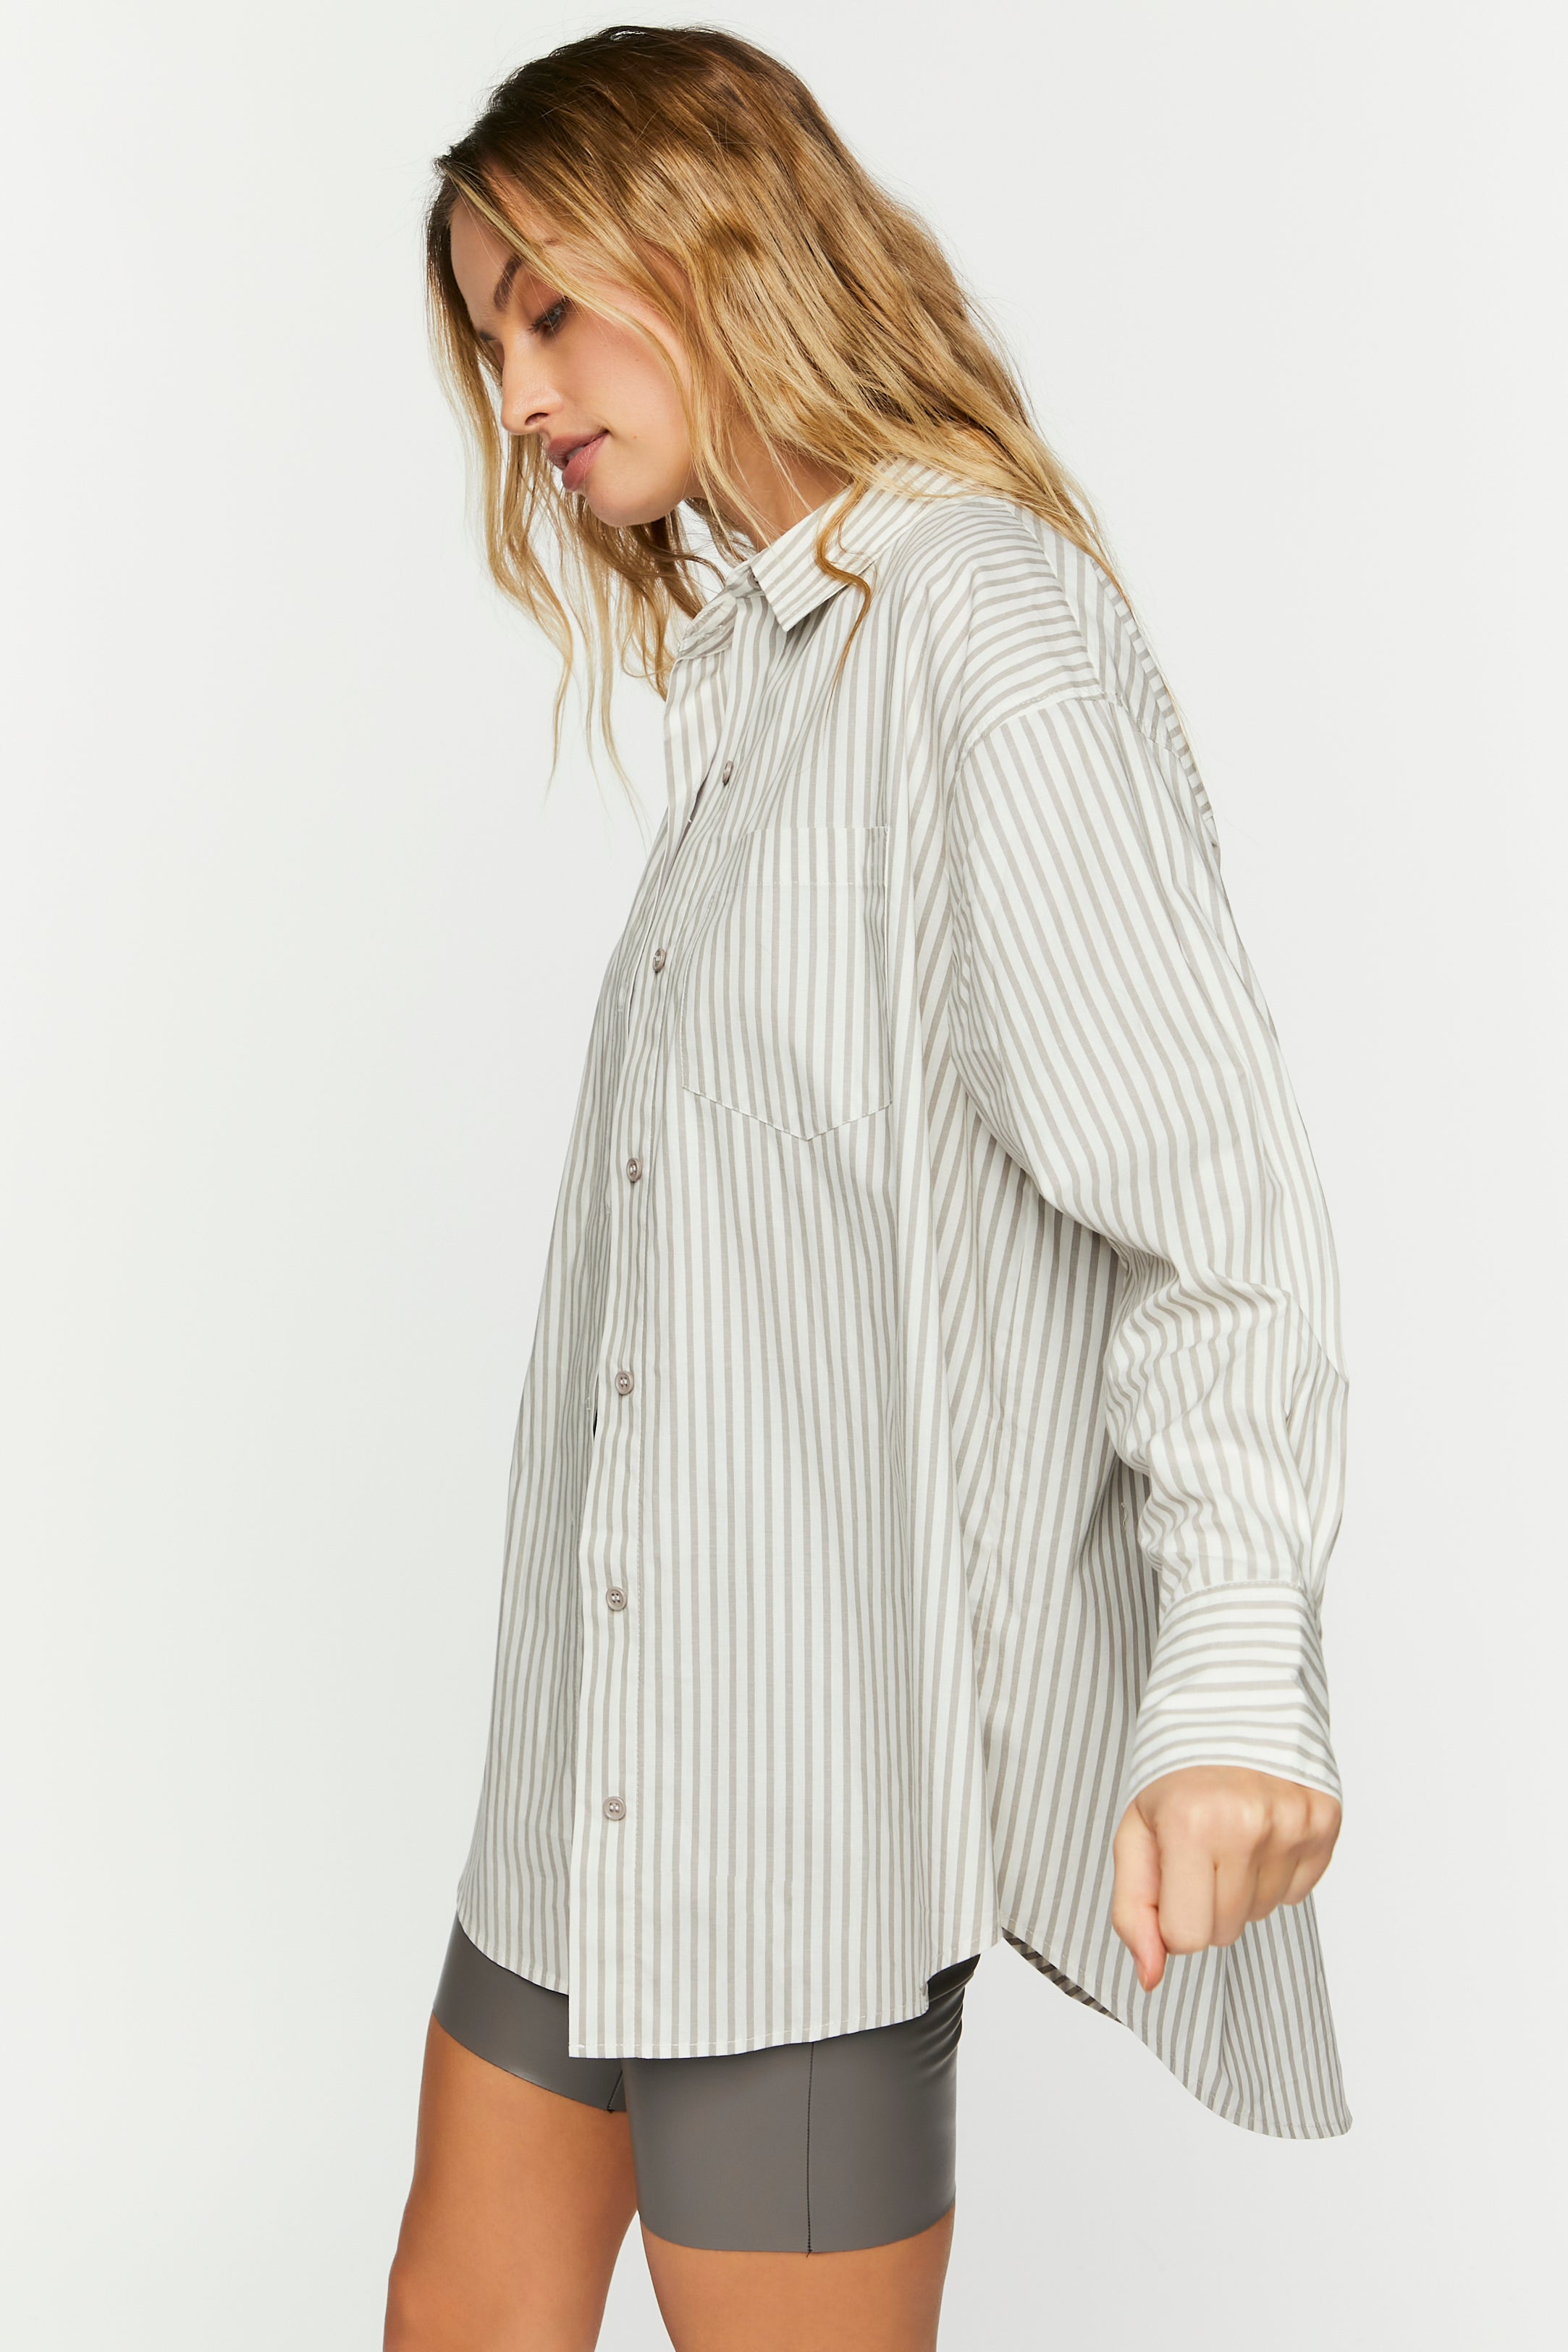 Castle/Vanilla Oversized Striped Shirt 2